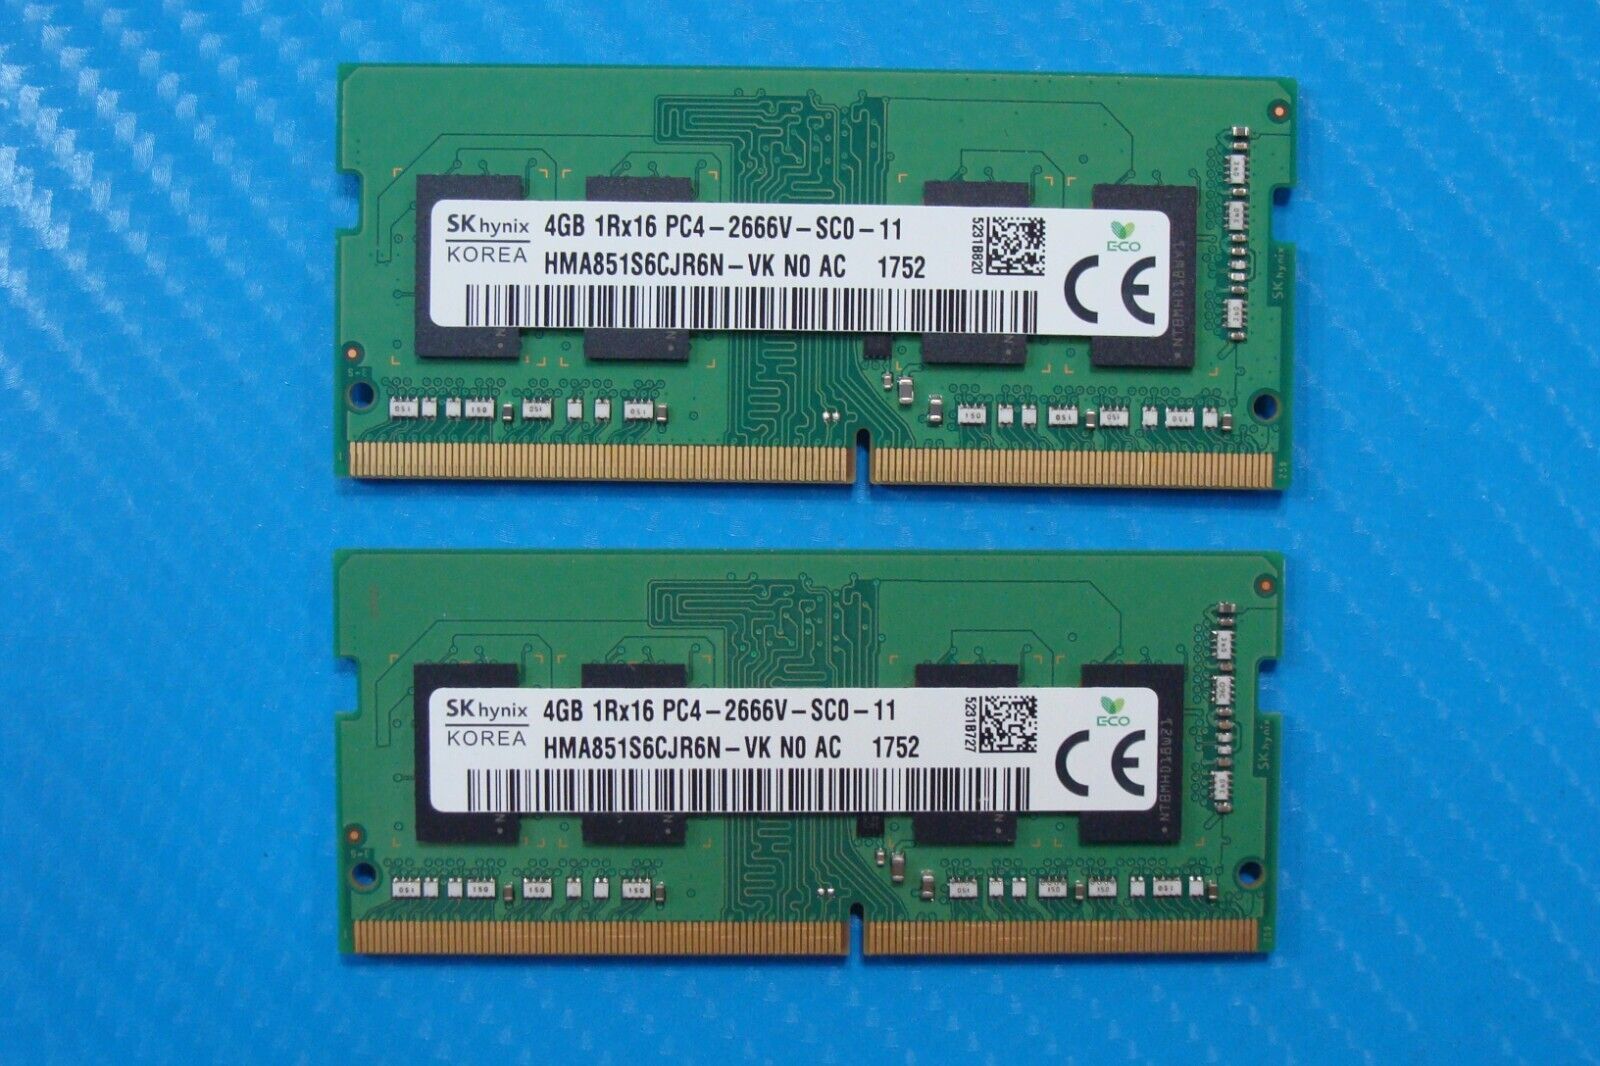 Dell 3579 SK Hynix 8GB 2x4GB 1Rx16 PC4-2666V Memory RAM SO-DIMM HMA851S6CJR6N-VK